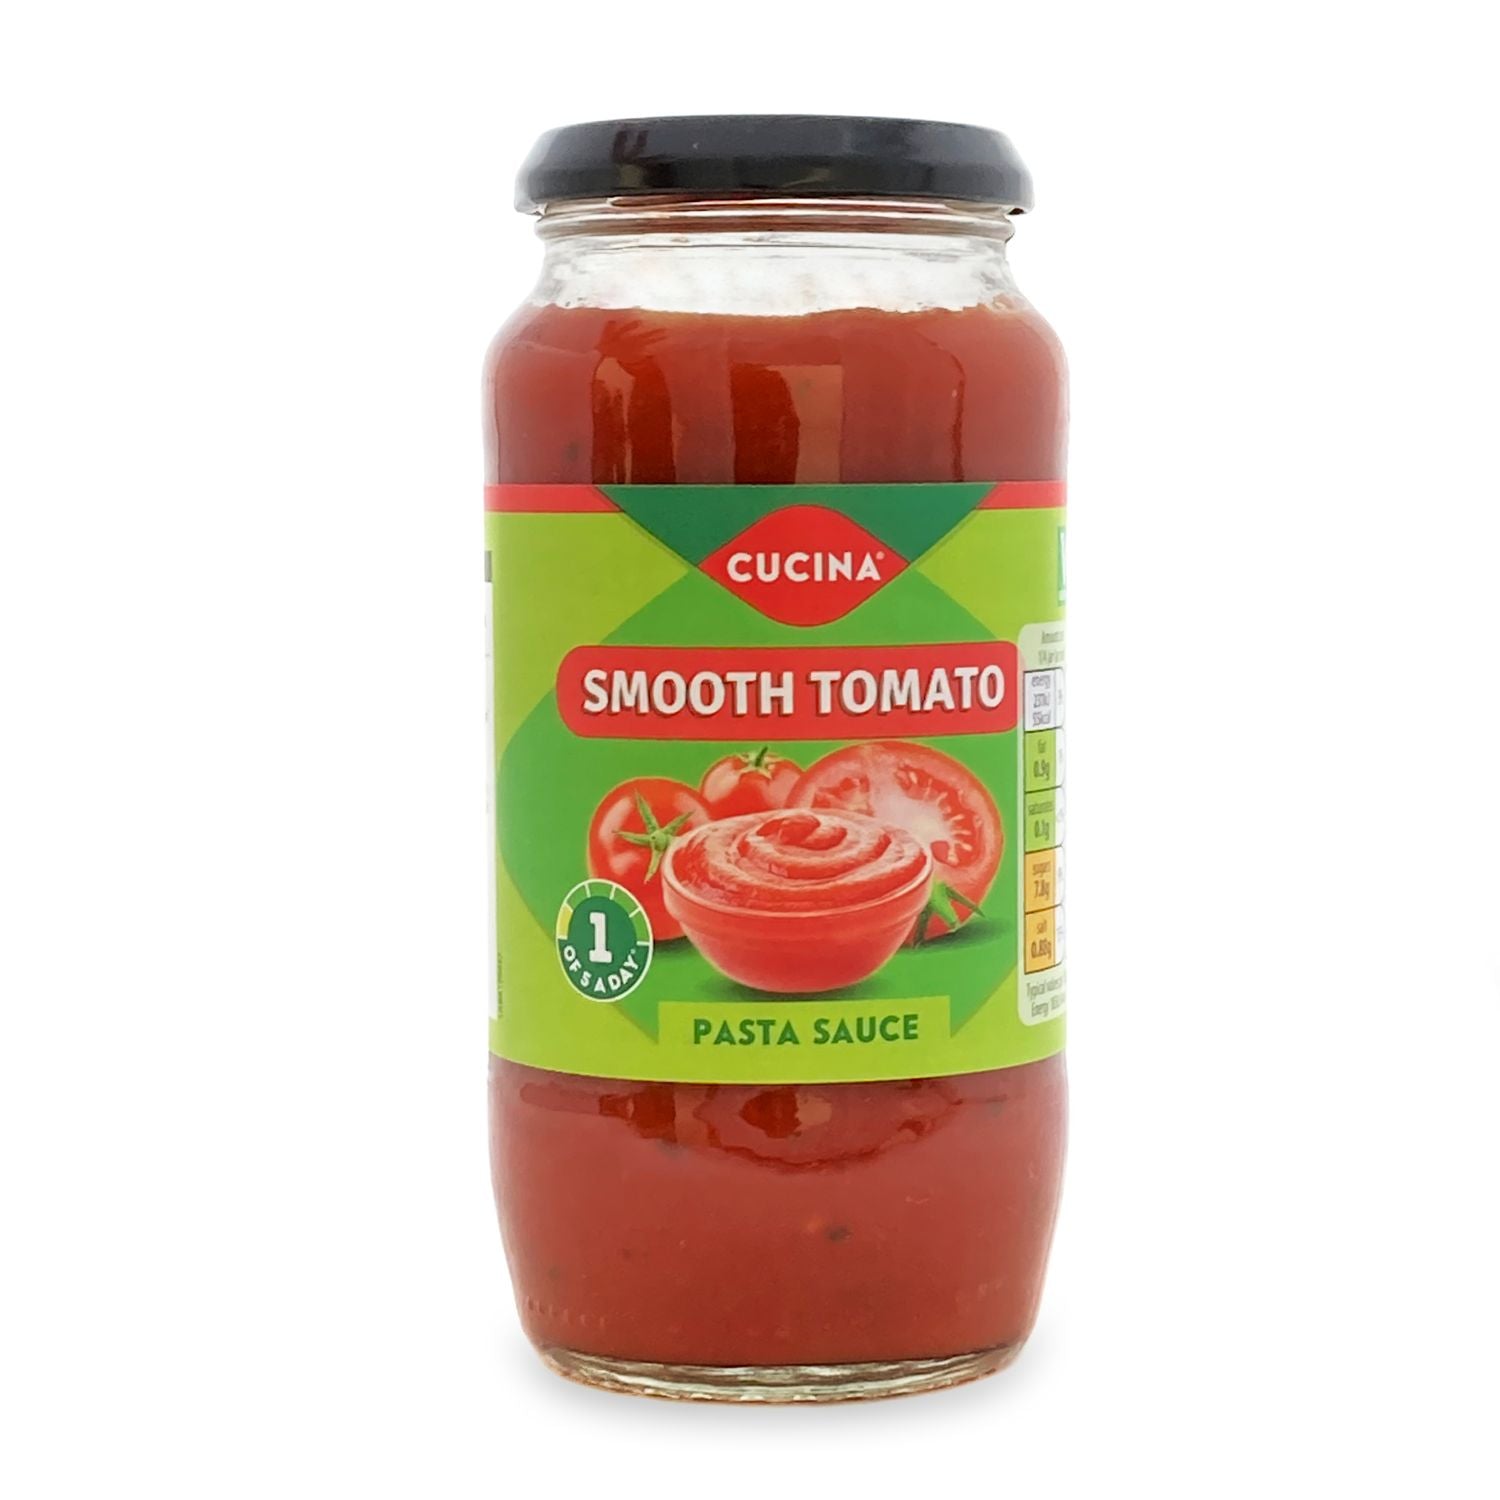 Cucina Smooth Tomato Pasta Sauce 500g (2 Pack)